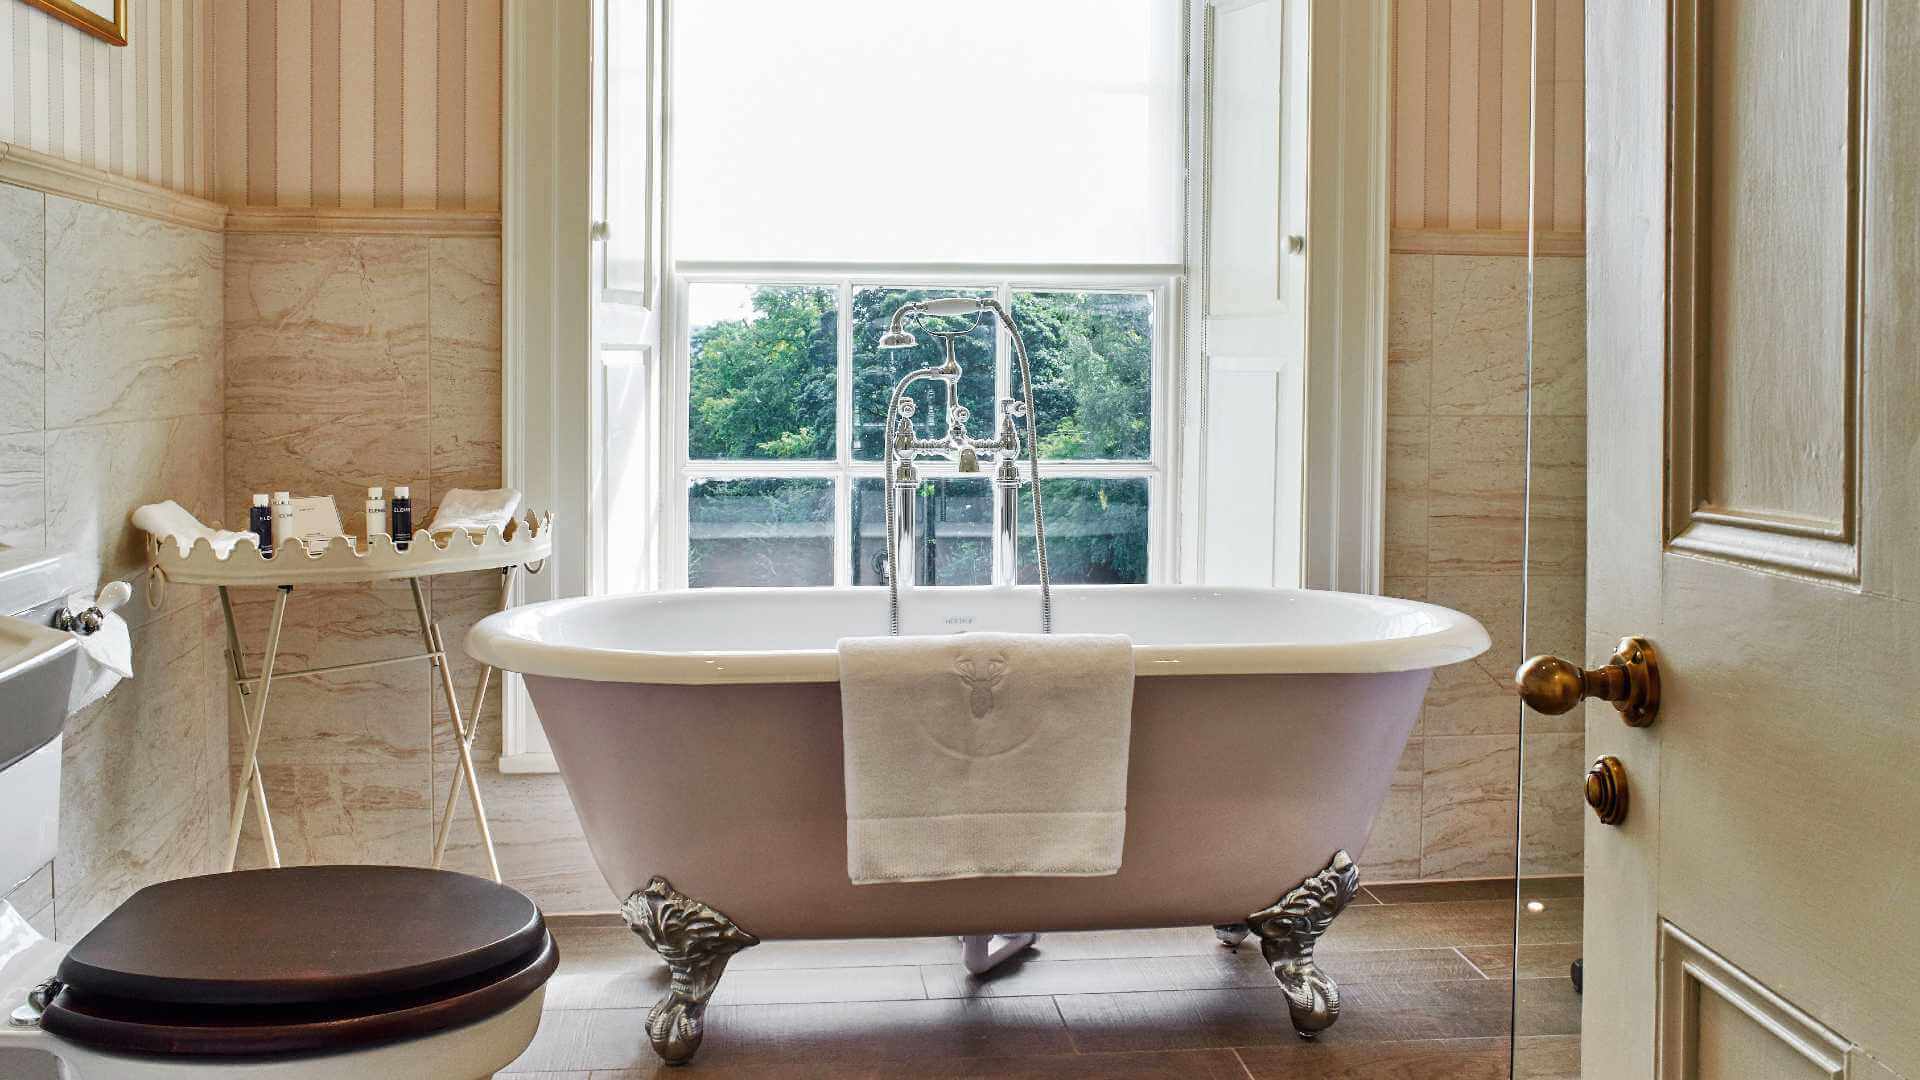 Walwick Hall bathtub